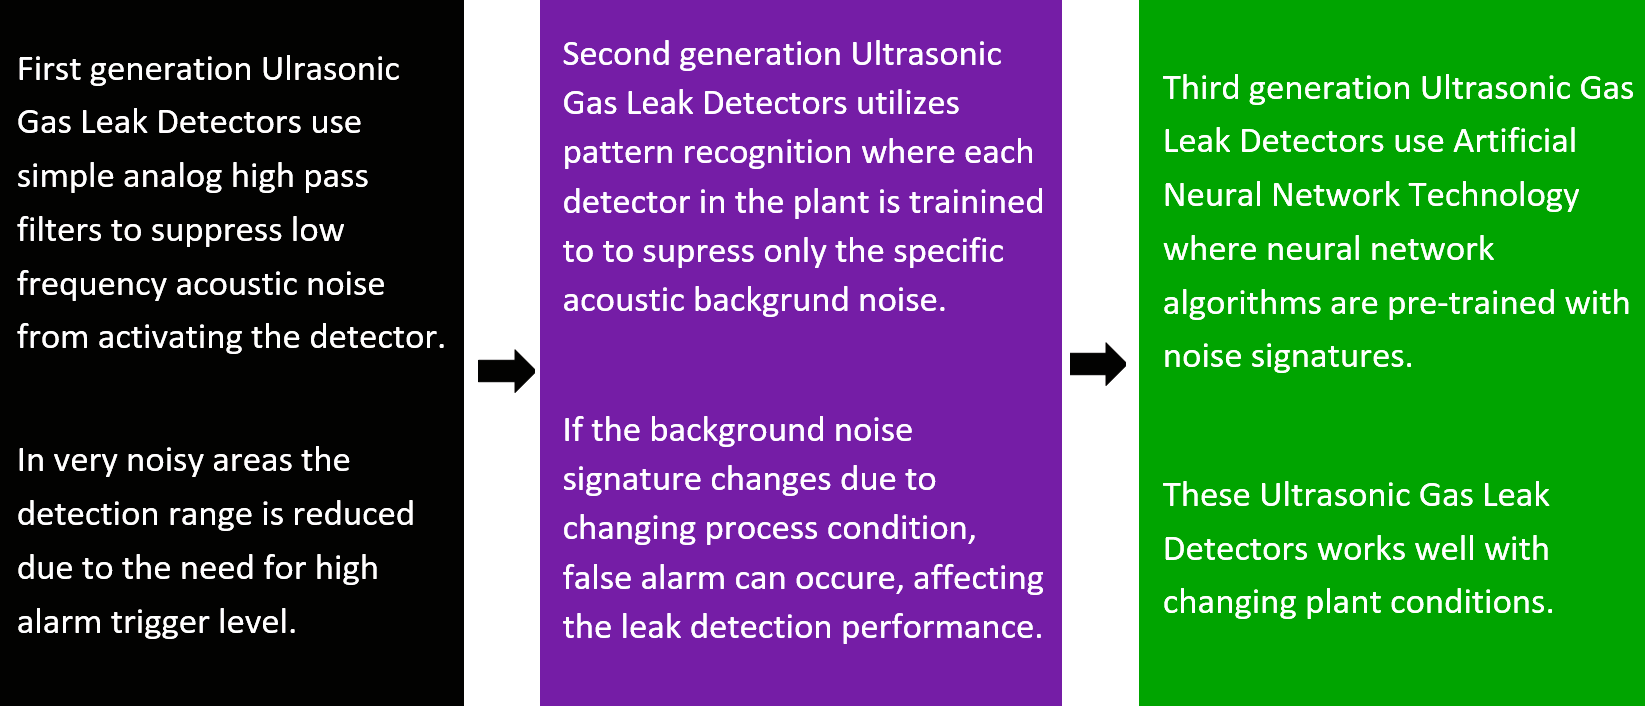 History of Ultrasonic gas leak detectors